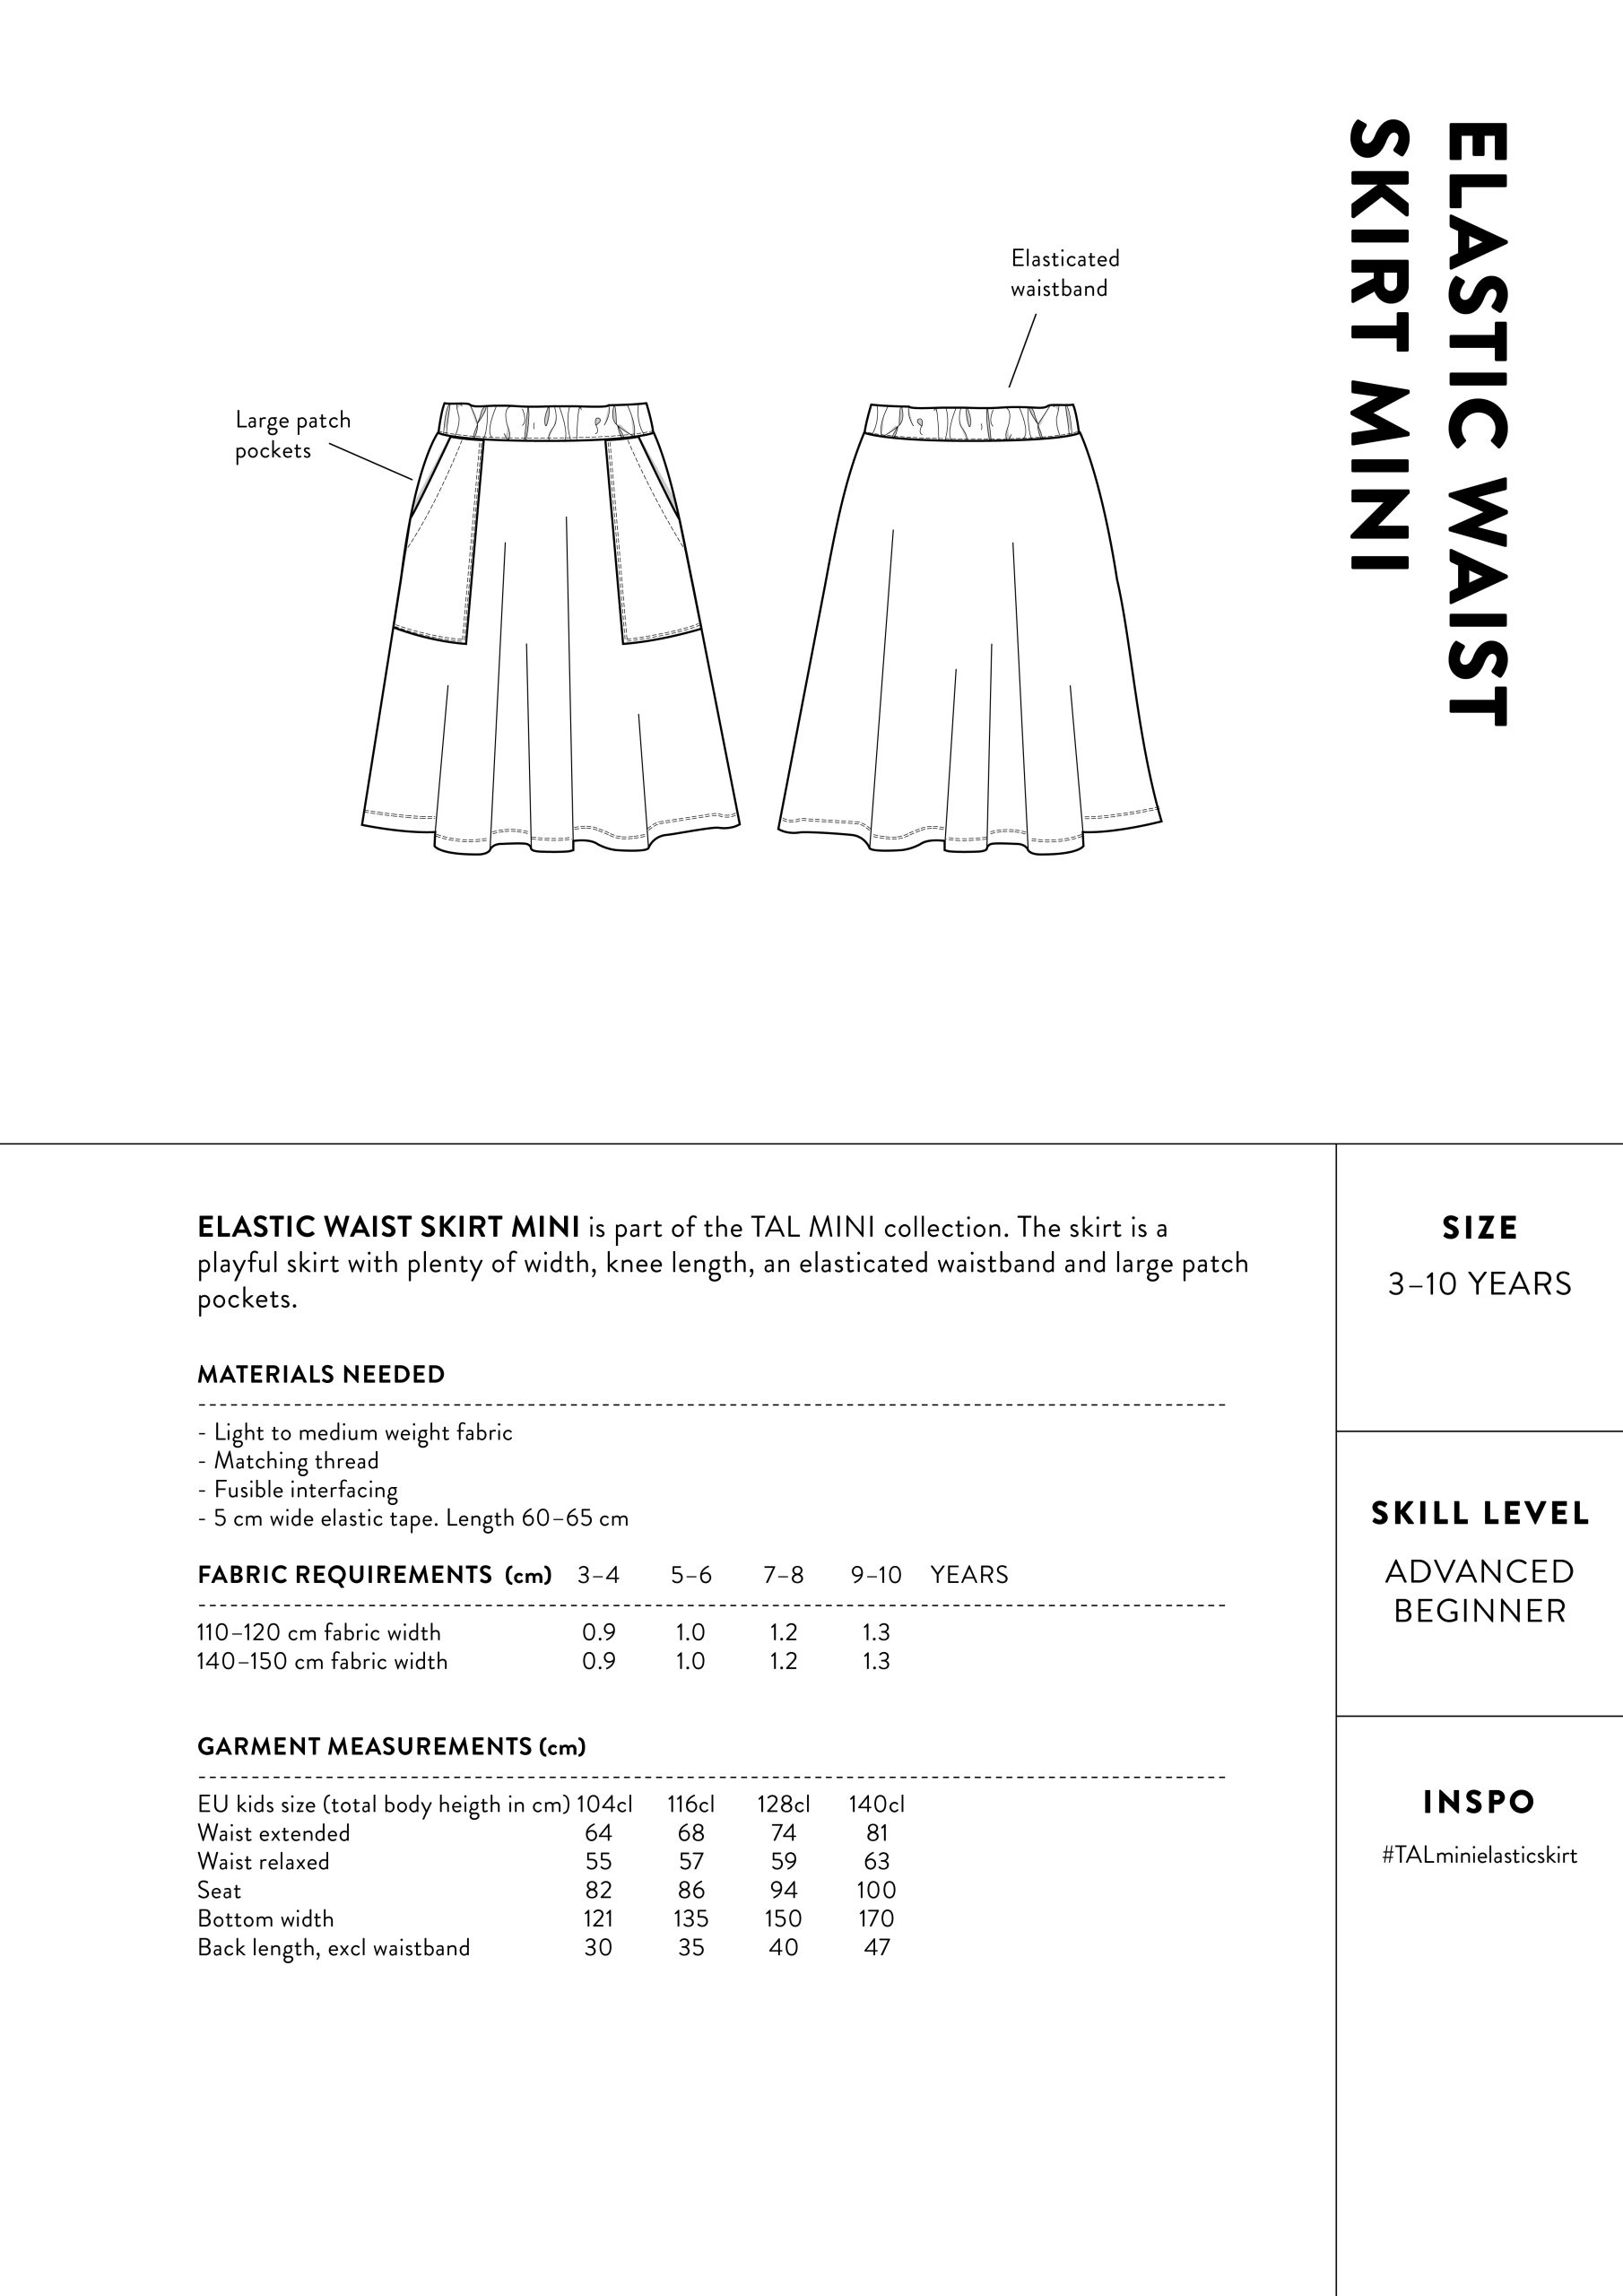 The Assembly Line Elastic Waist Skirt Mini - The Fold Line